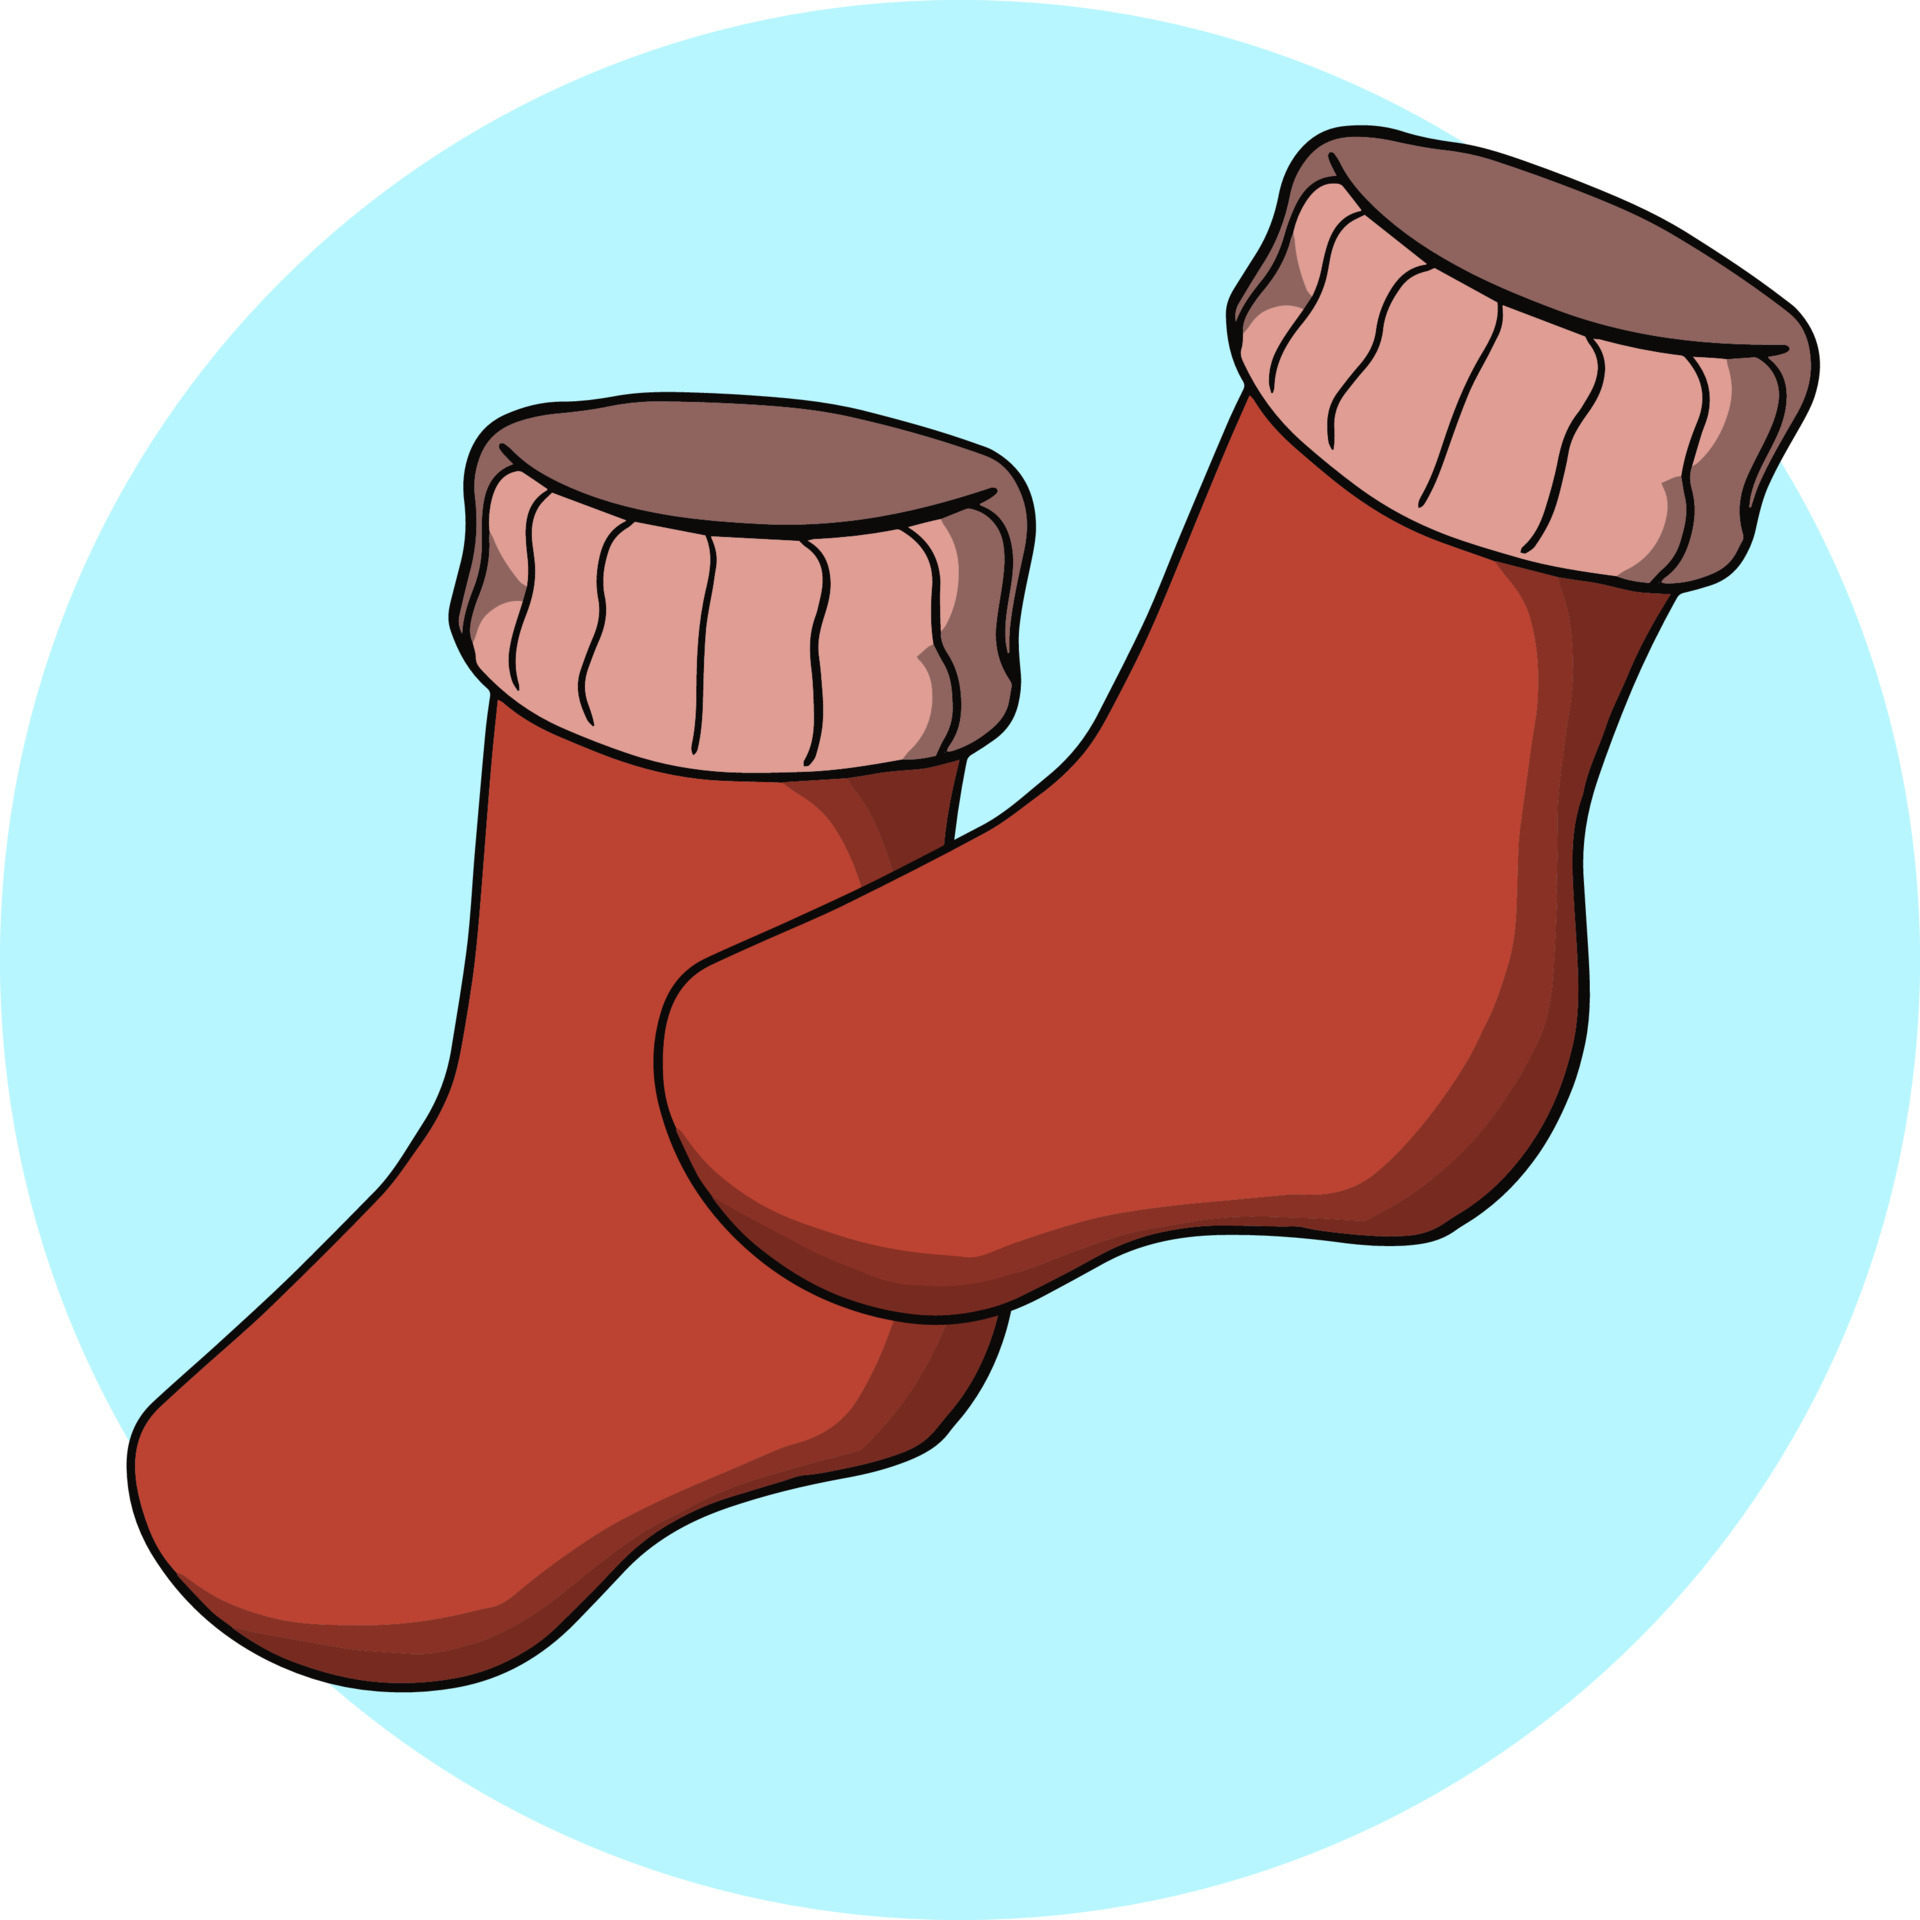 bright red socks for winter. Vector illustration on a round light blue ...